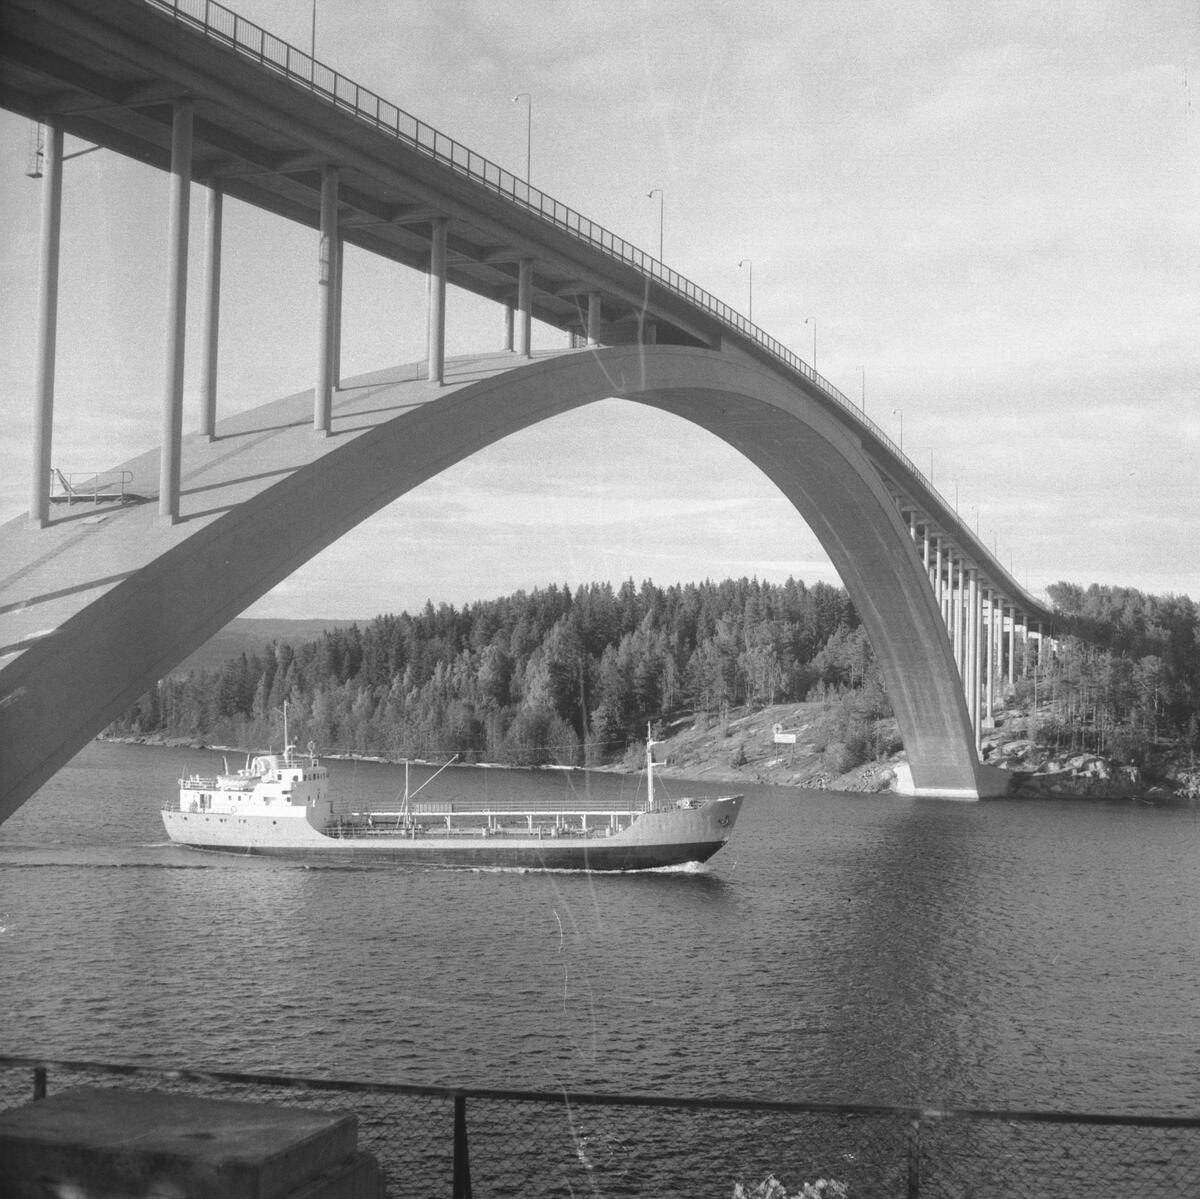 Fartyget Unikorn vid Sandöbron

